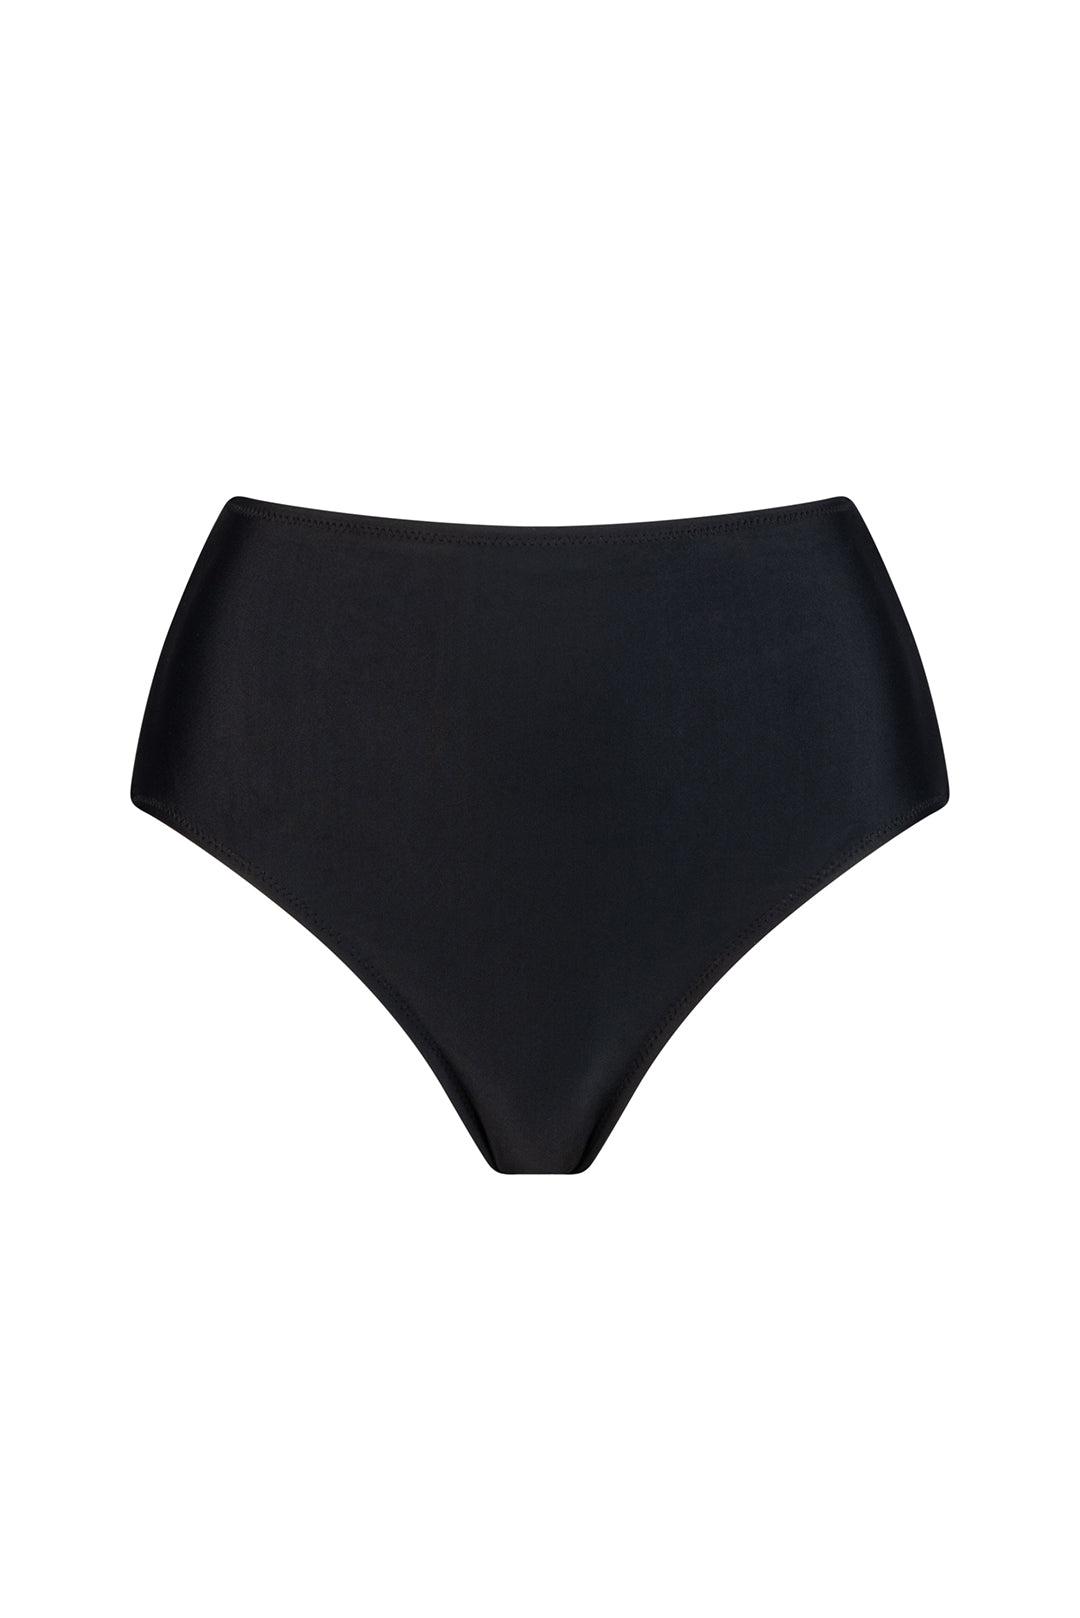 Tigerlily Ava Corset Bikini Bottom - Black-Tigerlily